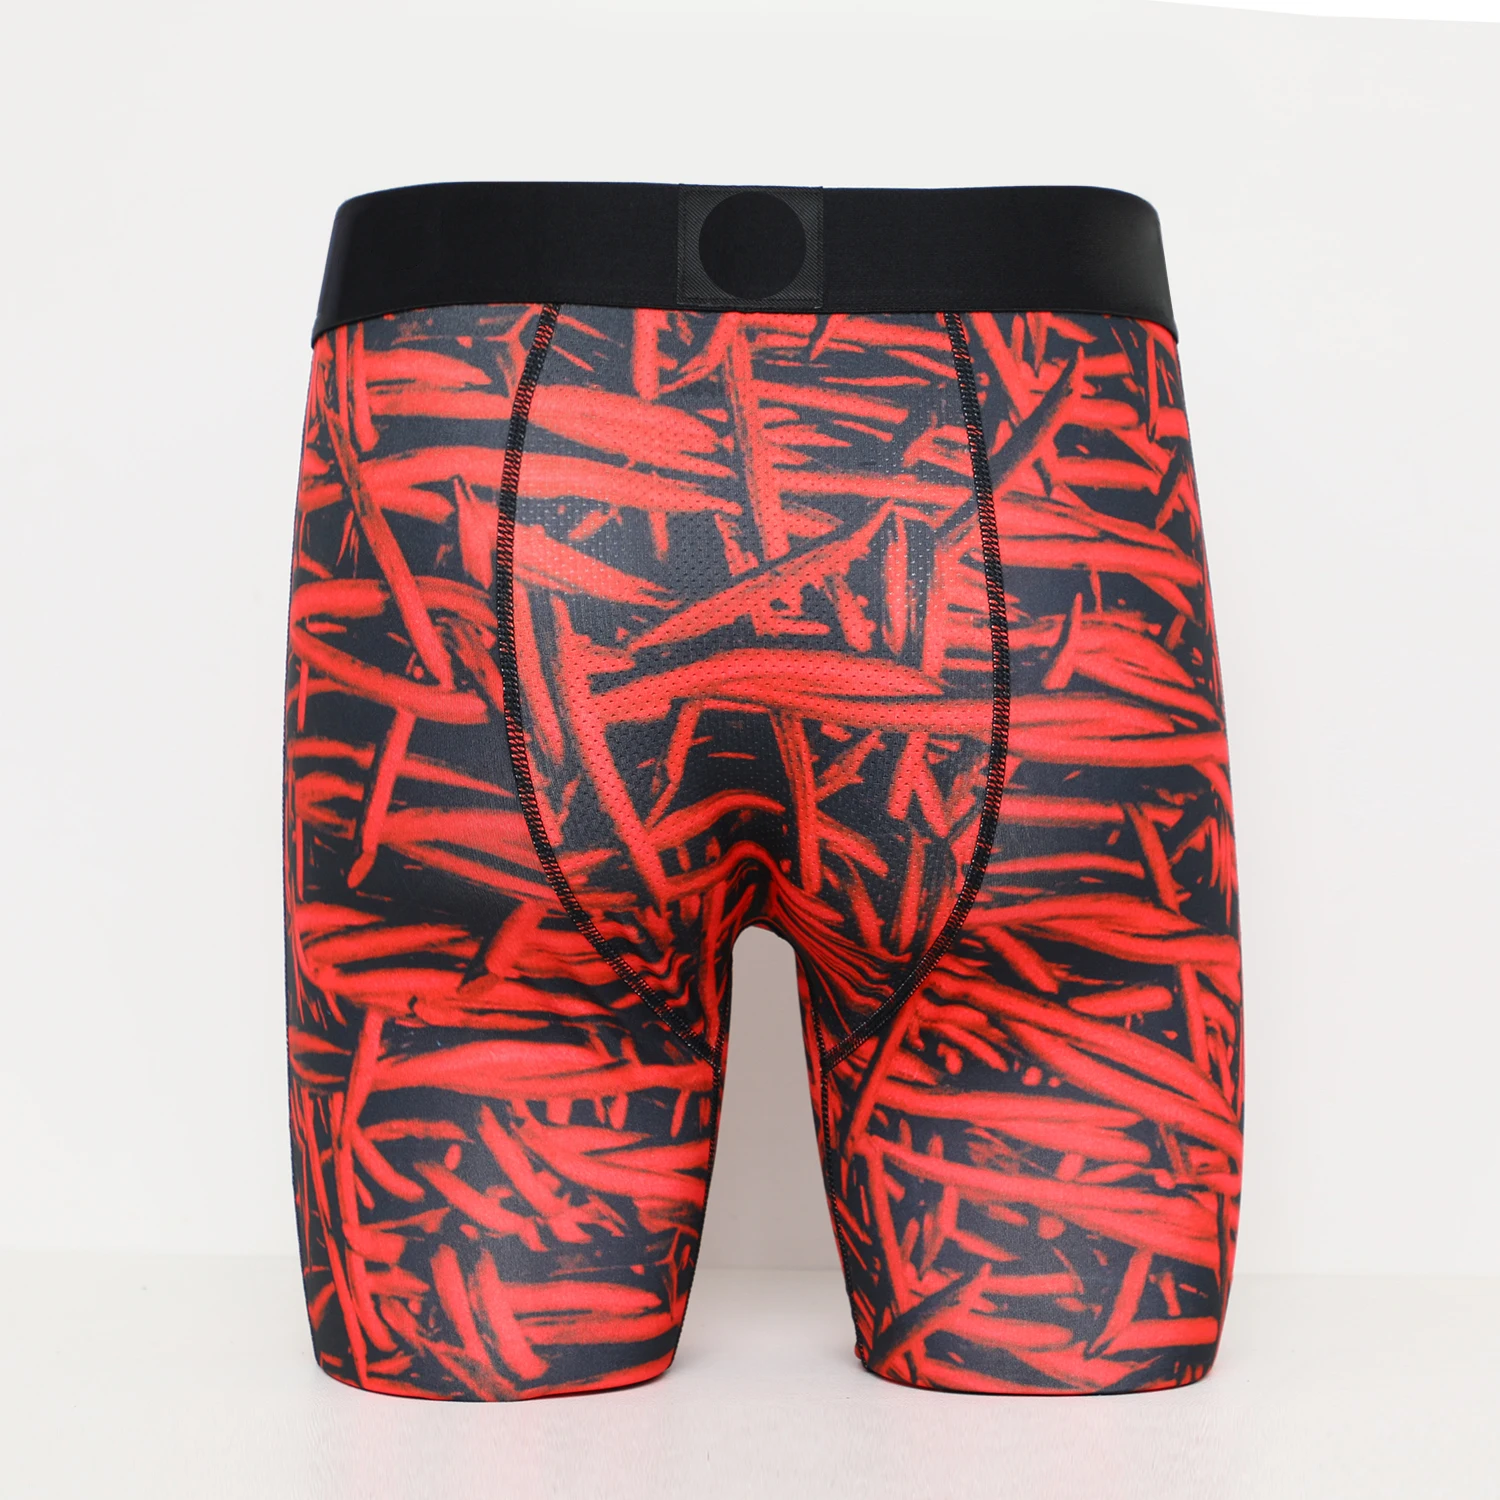 44 Runtz Psd Men's Boxer Briefs Underwear Warfaces - Boxers - AliExpress